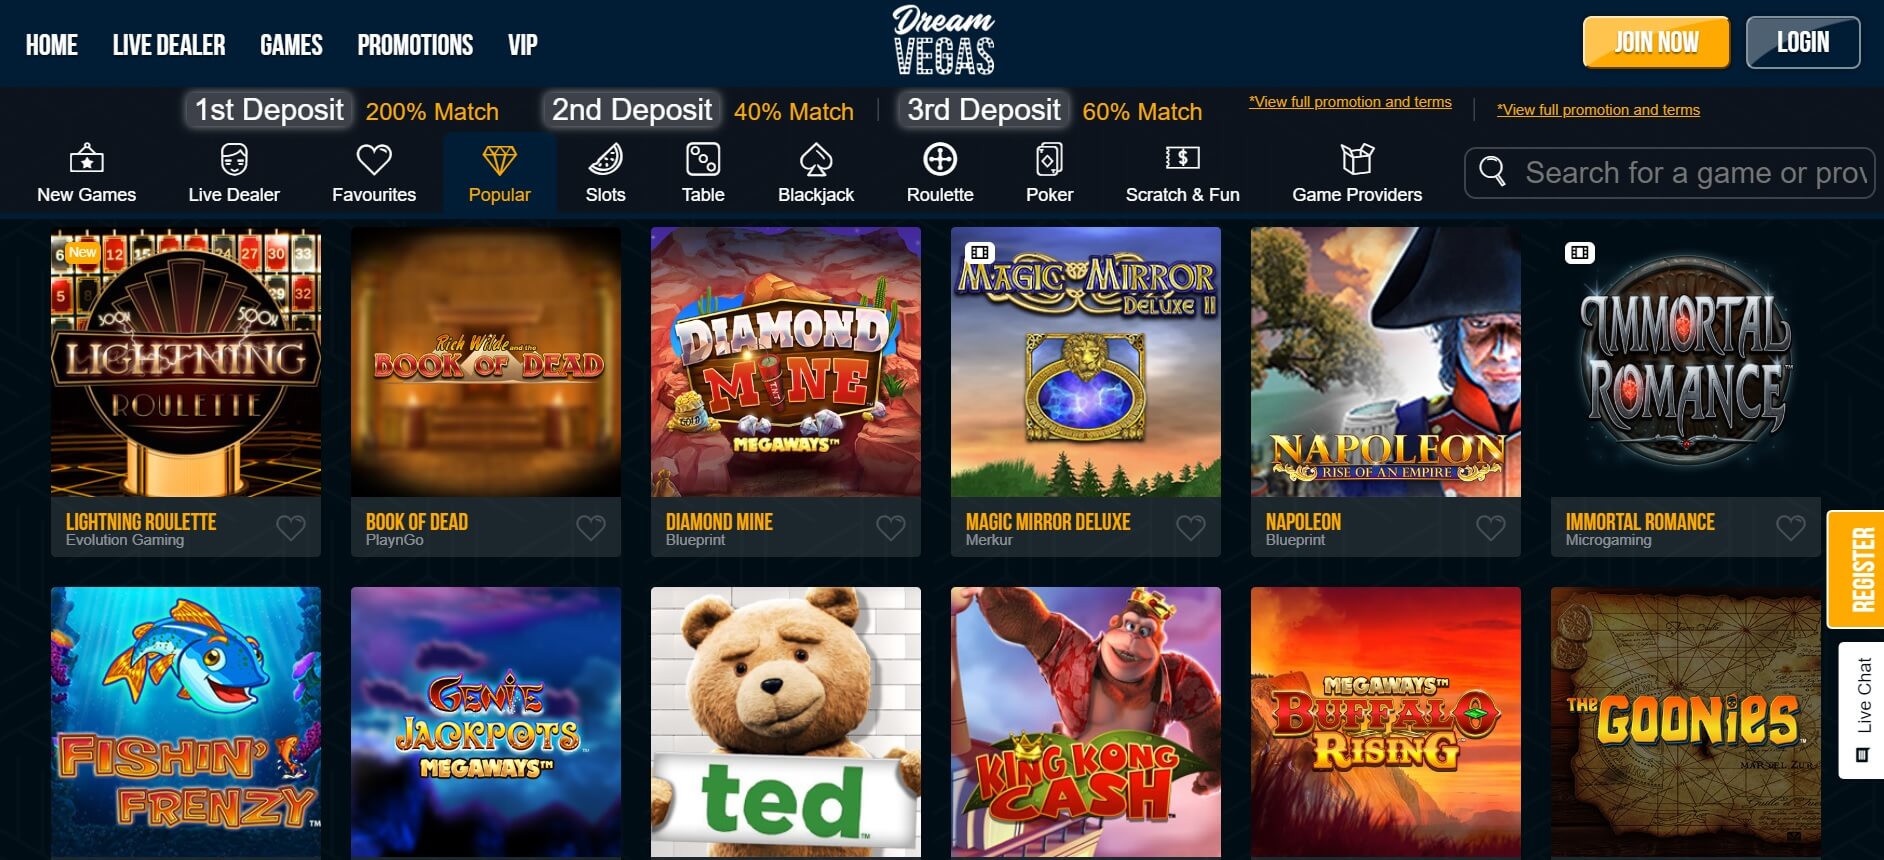 dream vegas casino games slots canada